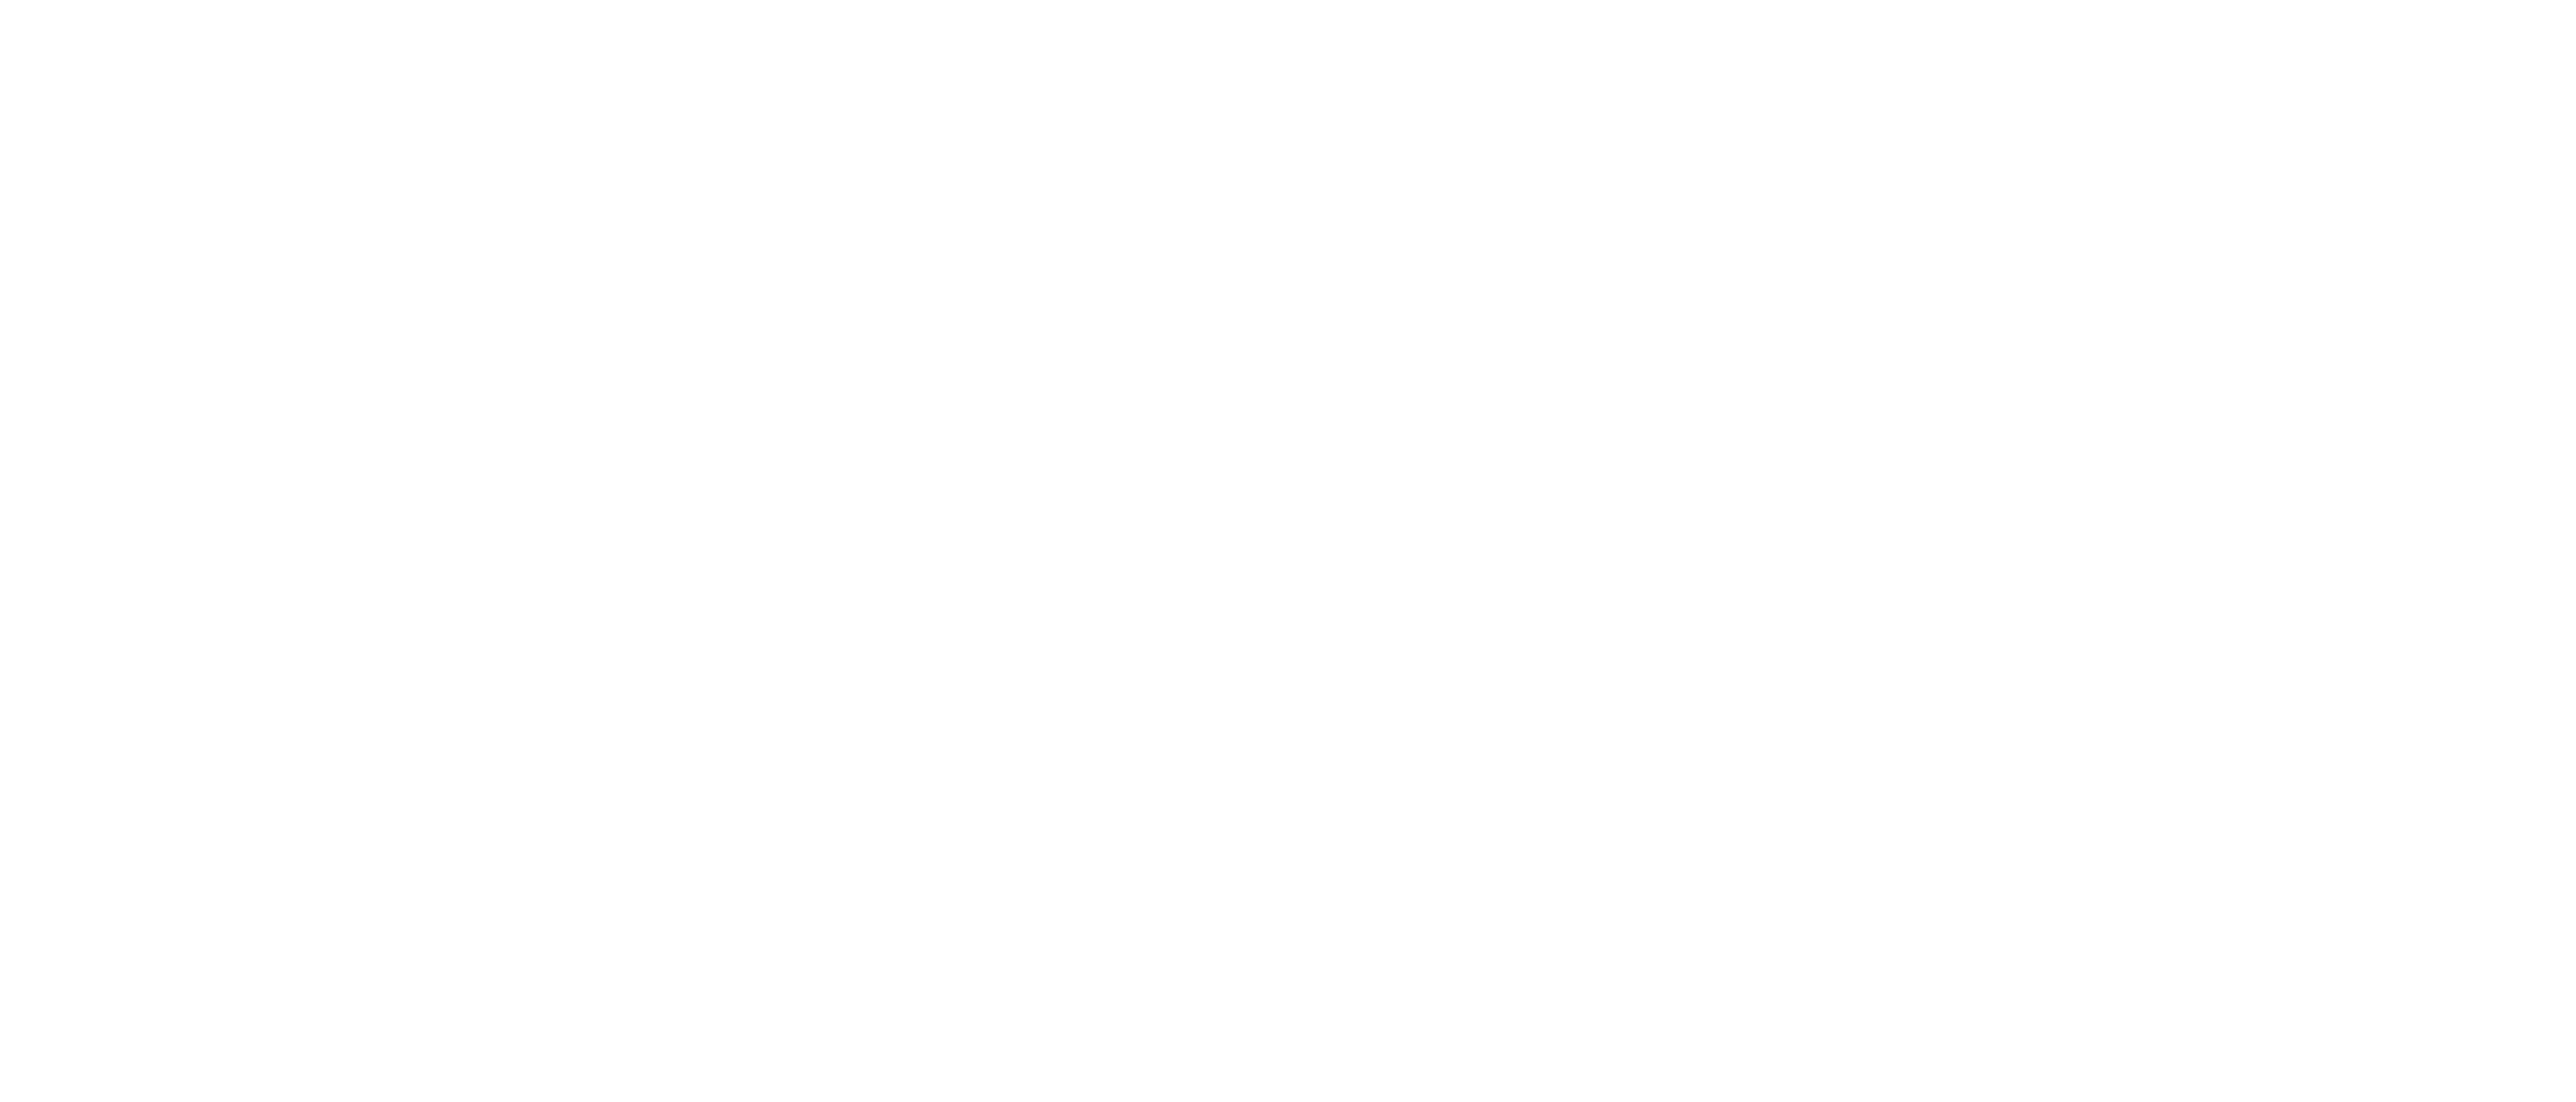 Infostrux logo vertical white with padding